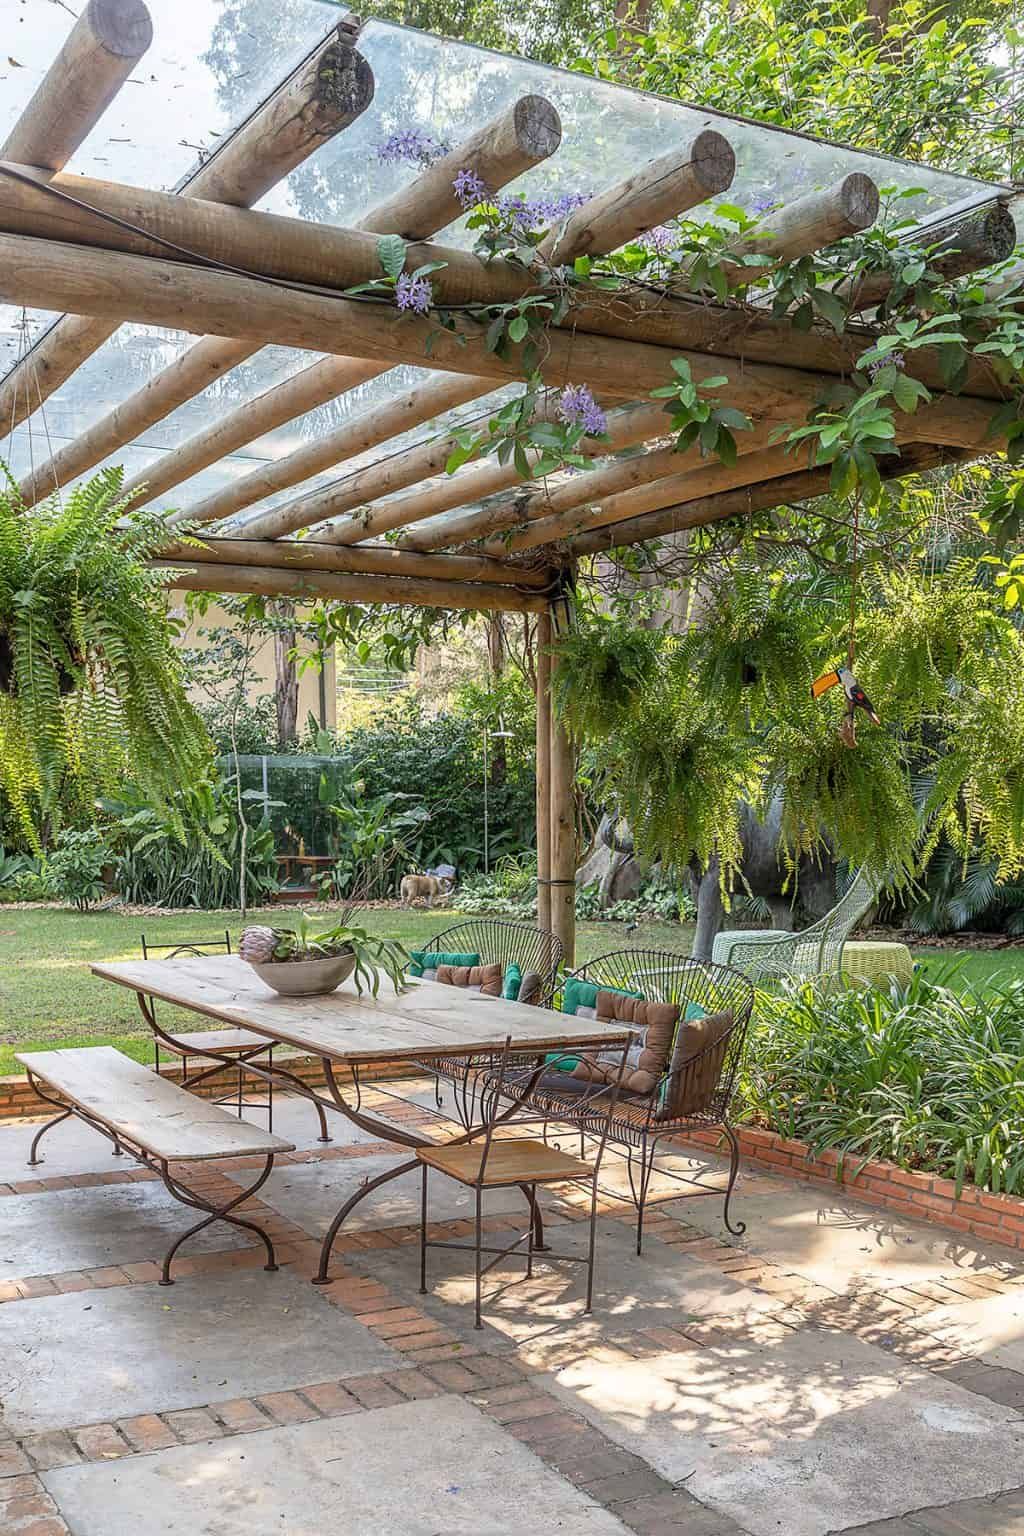 Backyard Gazebo Design Transform your outdoor space with a stunning gazebo aesthetic